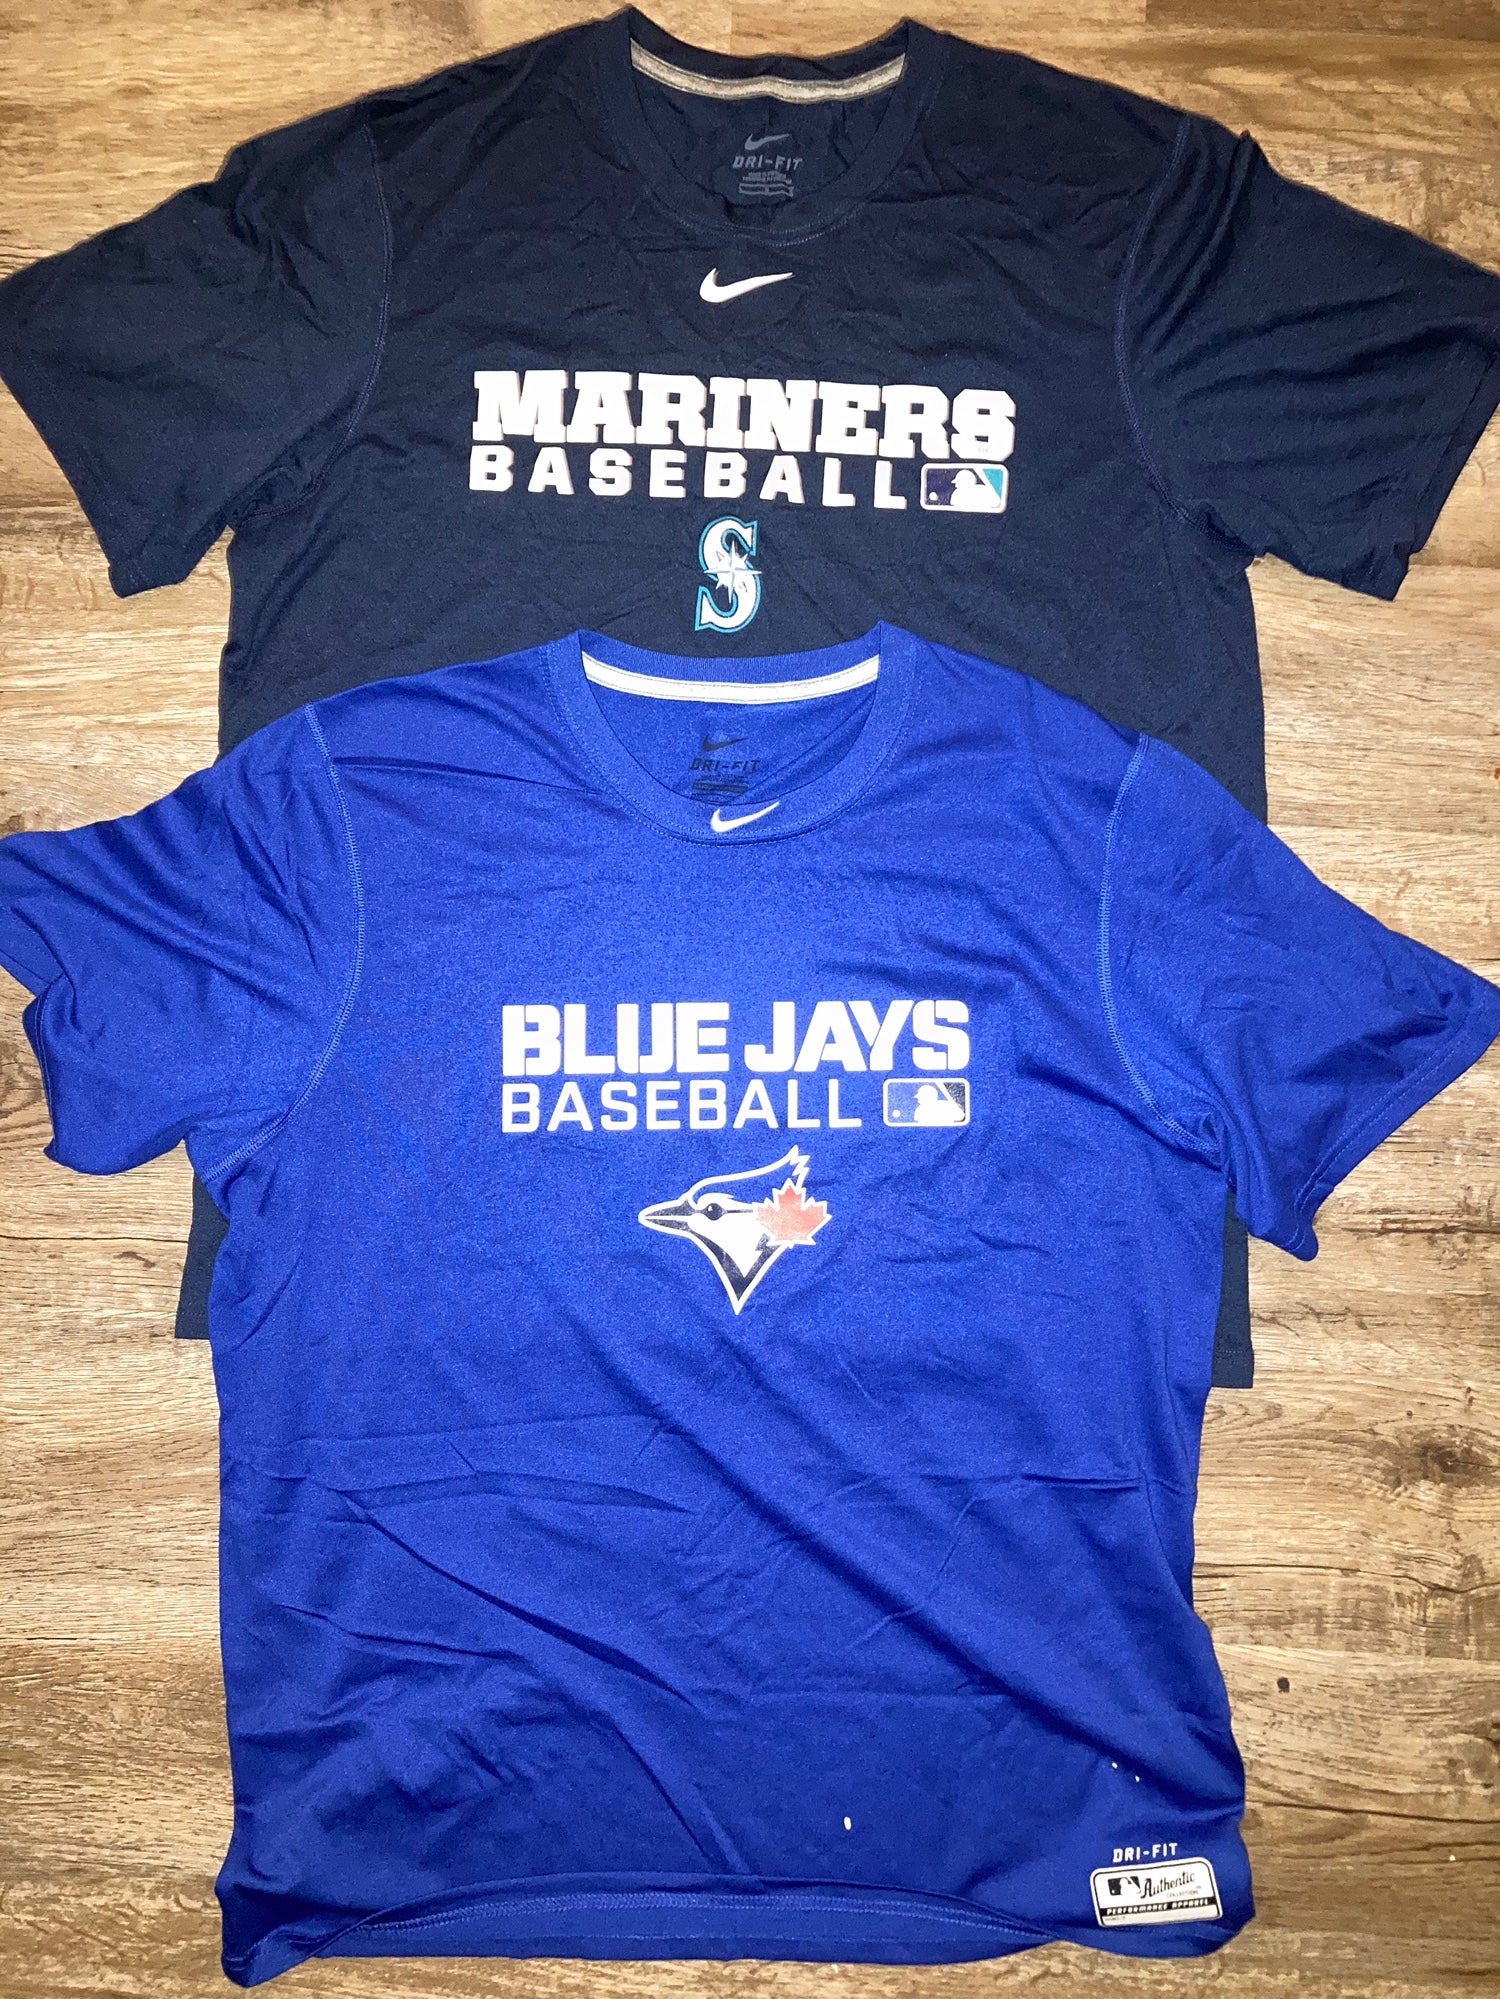 Large) Bundle: 2 New Nike Dri-Fit Shirts - Blue Jays & Mariners